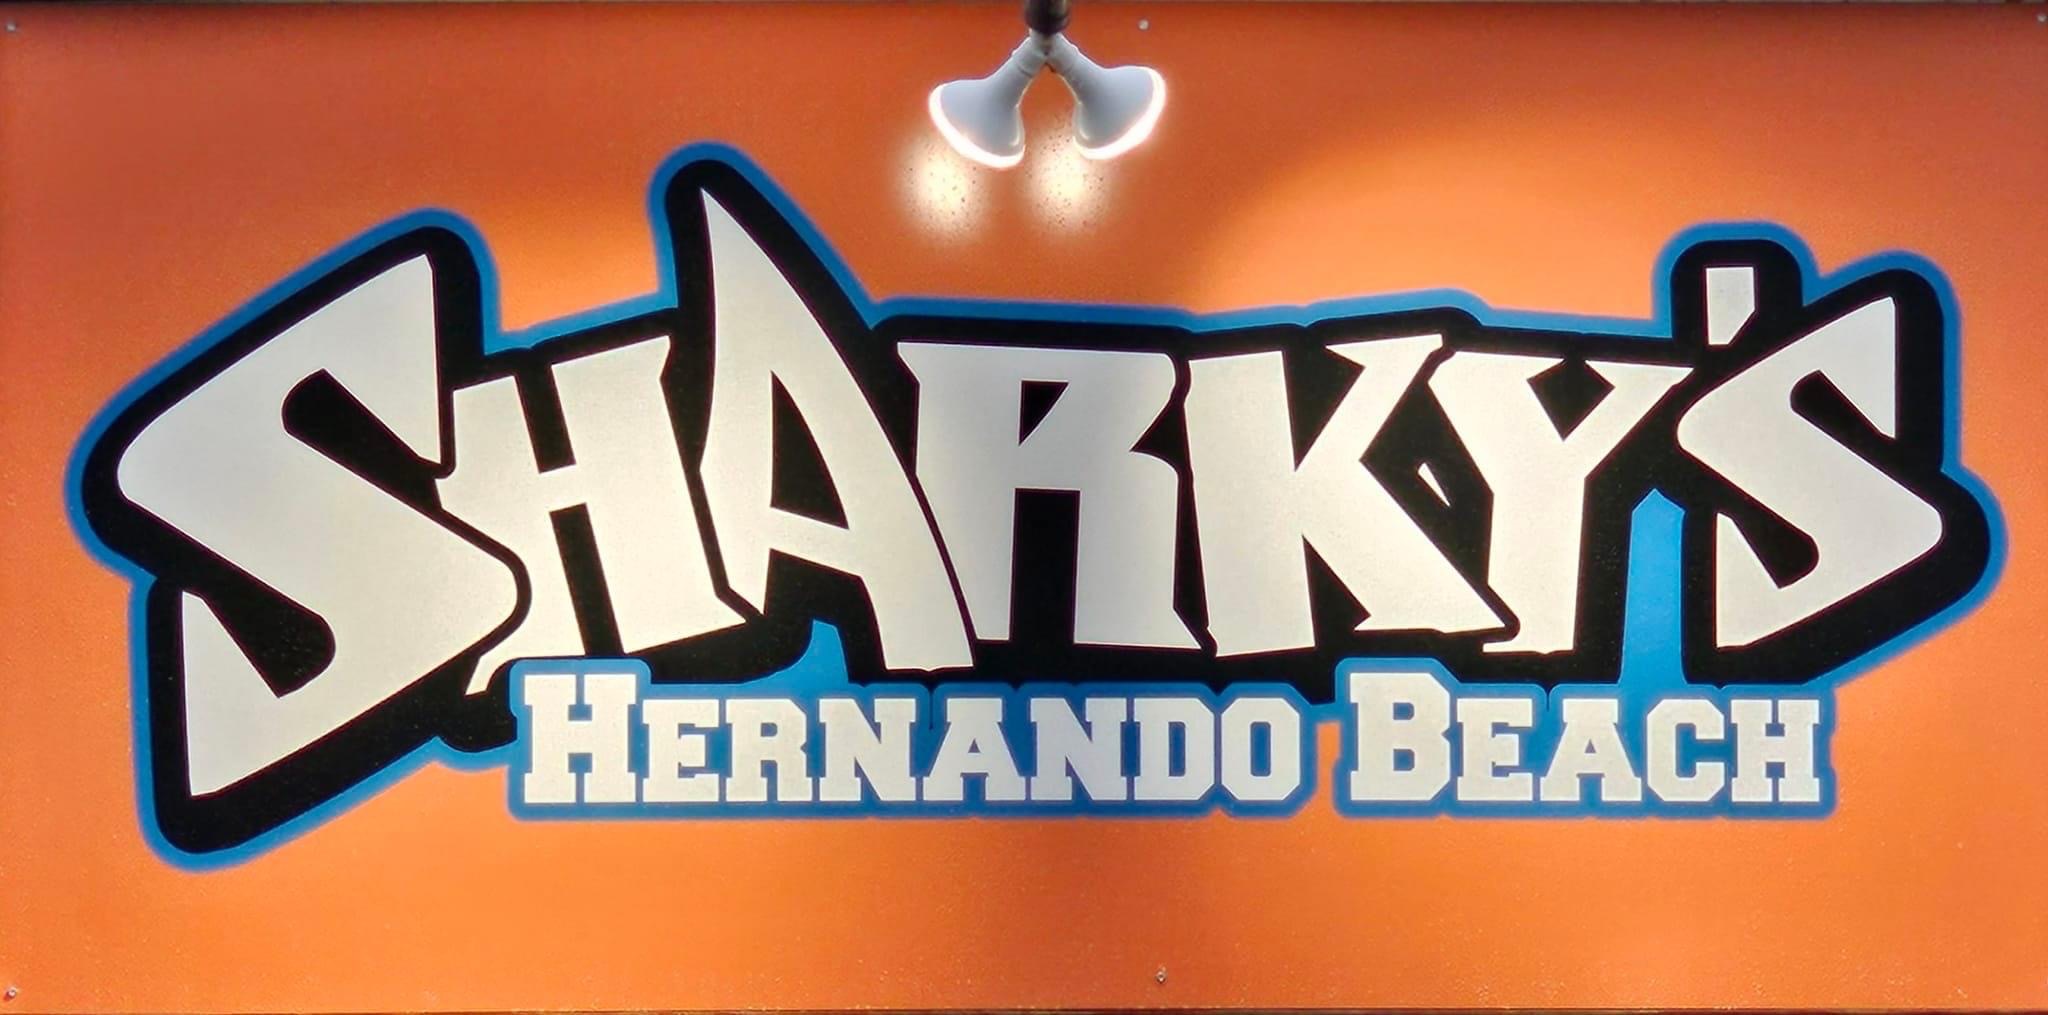 Sharkys Hernando Beach